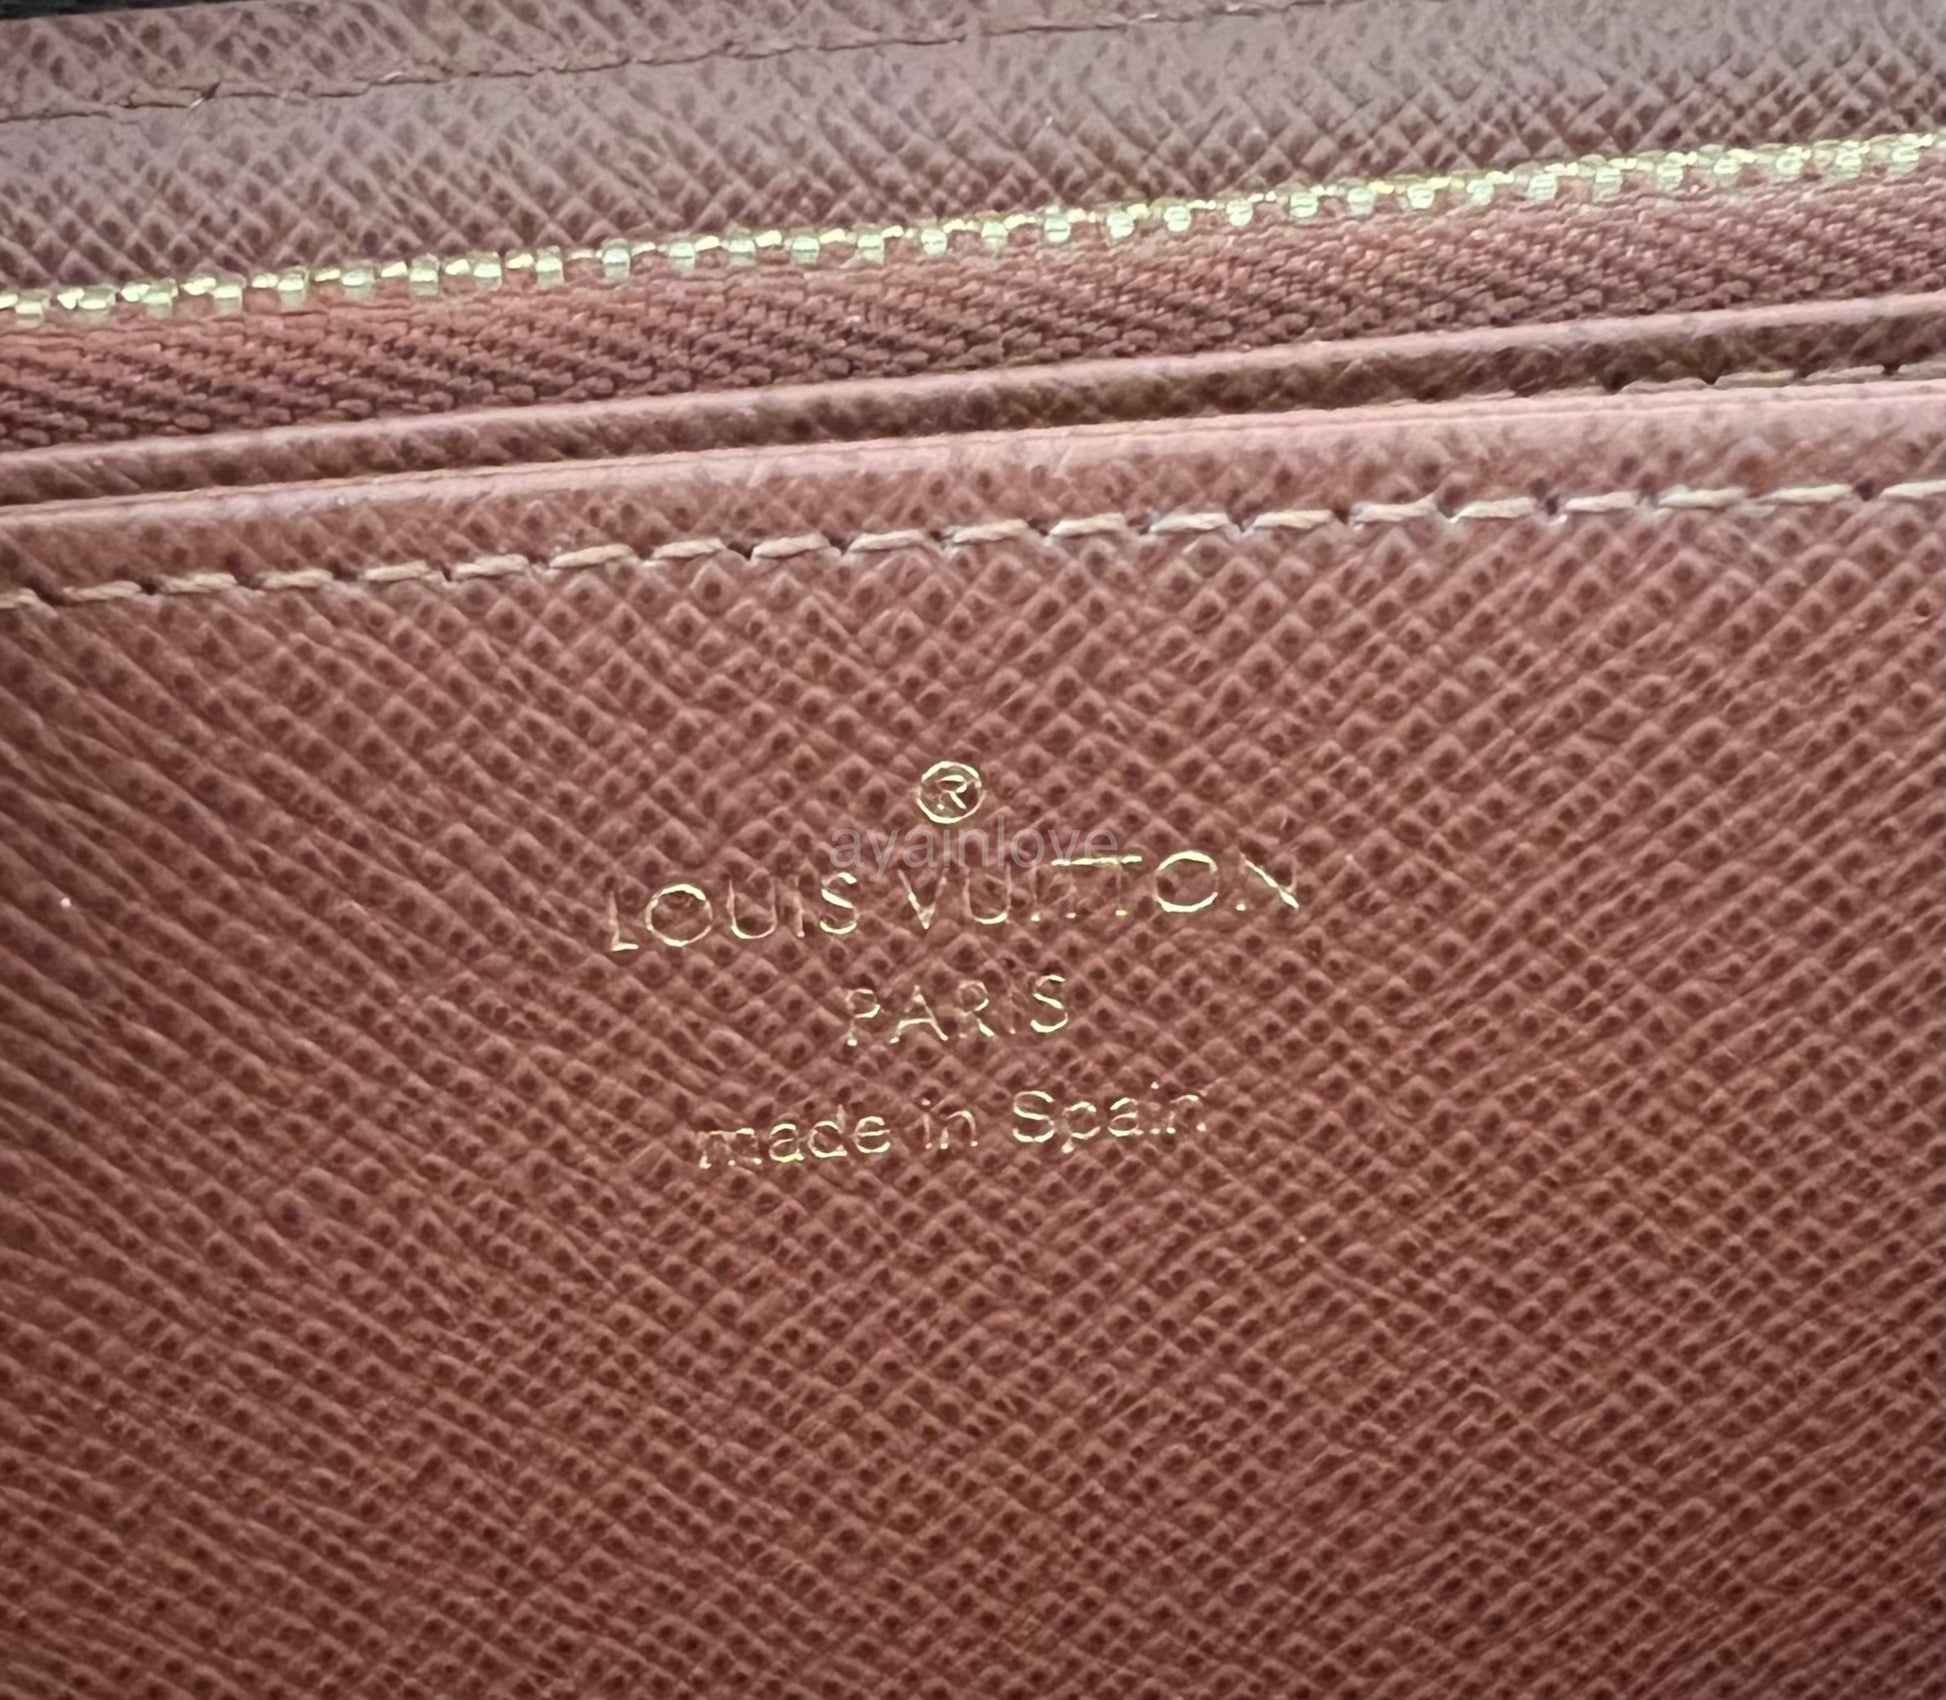 Louis Vuitton, Bags, Lv Wallet